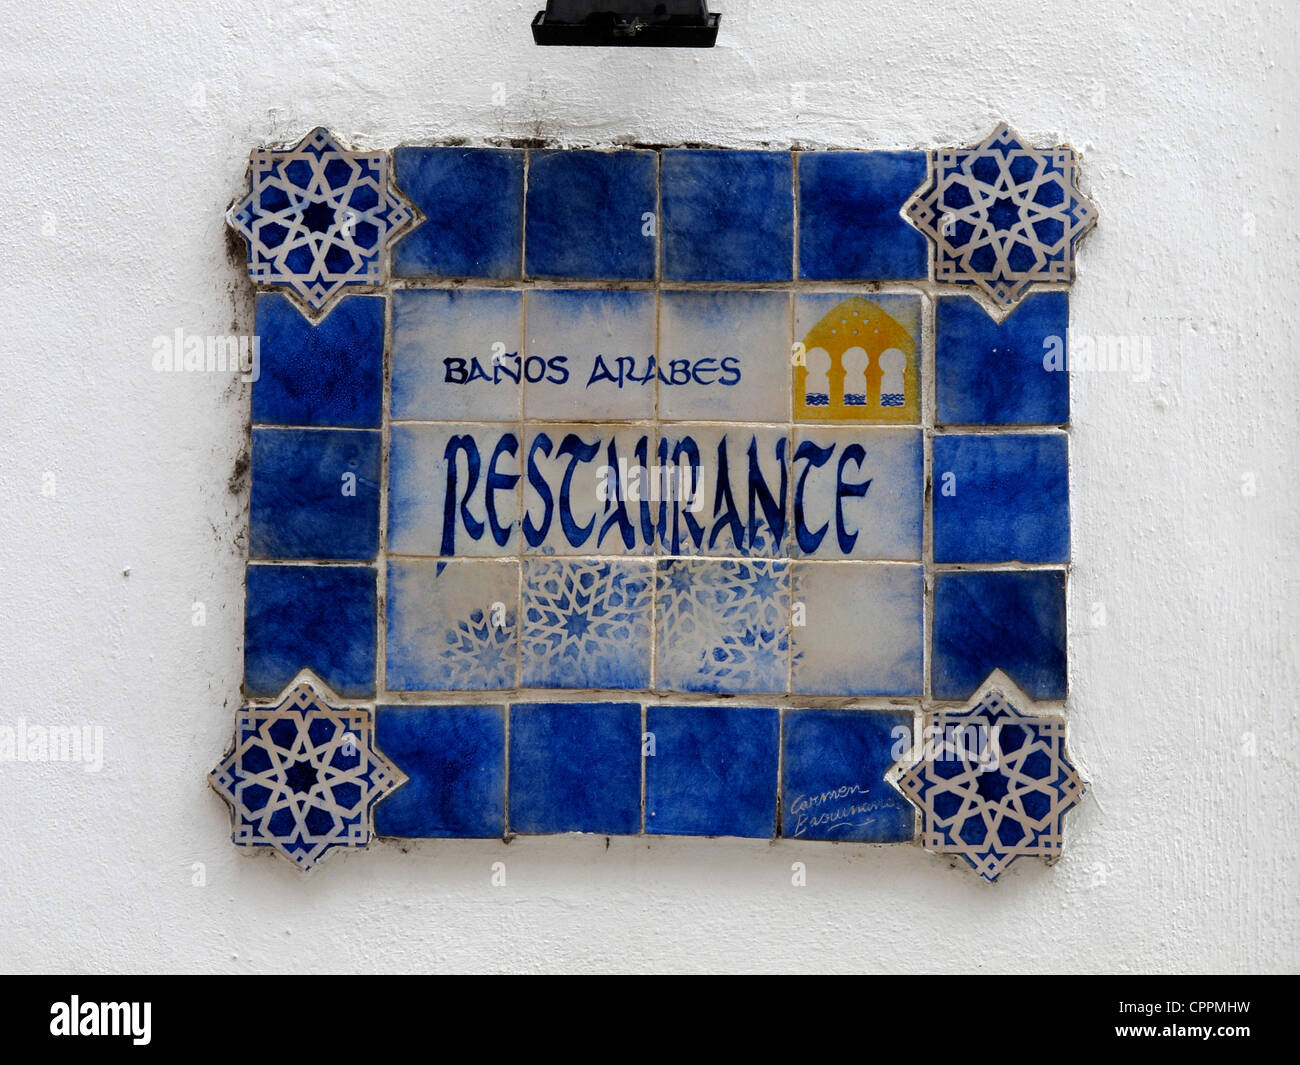 Spain Andalusia Cordoba Banos Arabes ceramic sign Stock Photo